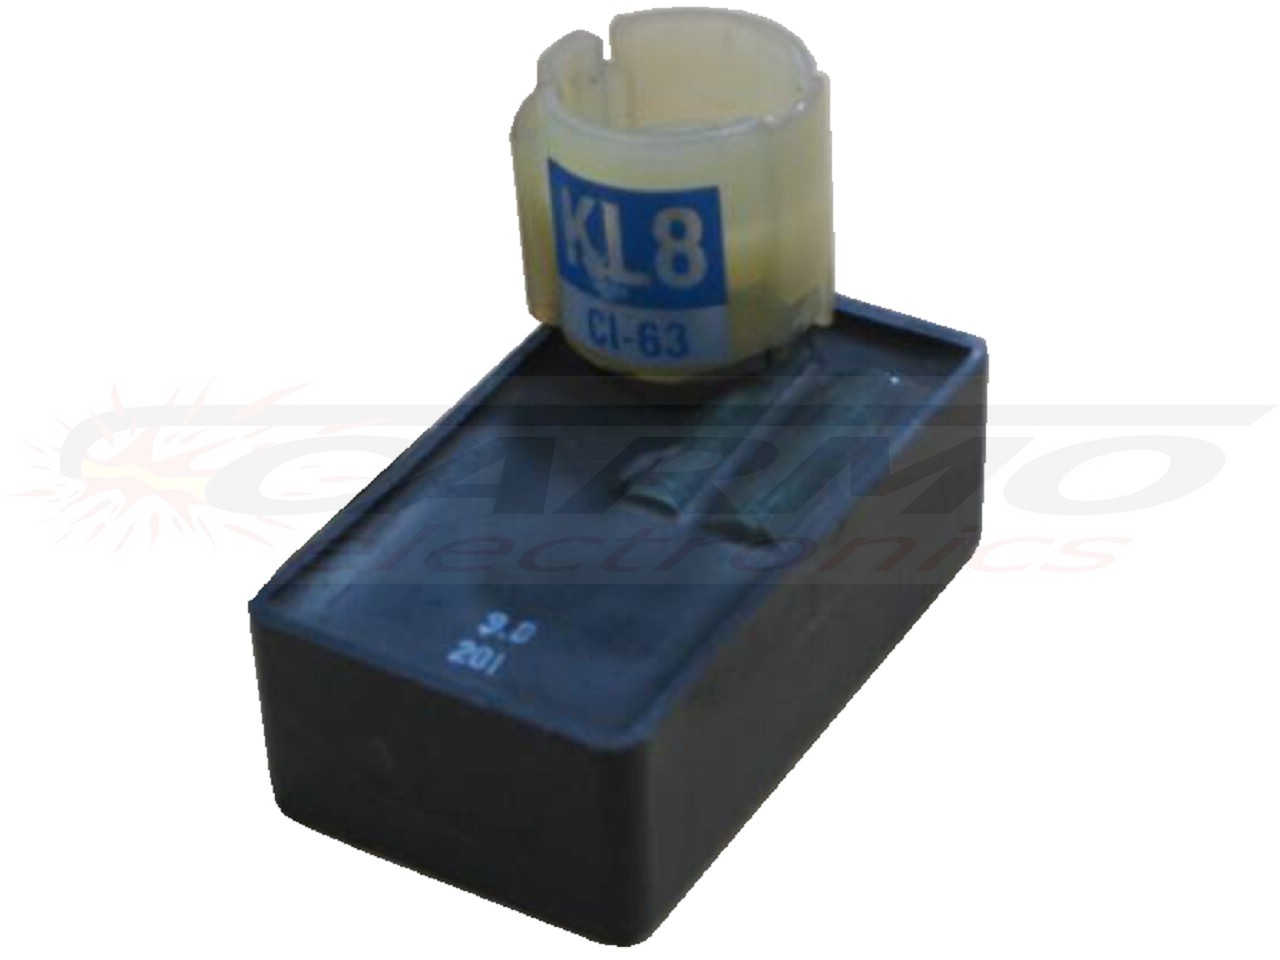 GB250 CB250 Clubman TCI CDI dispositif de commande boîte noire (KL8, CI-63)